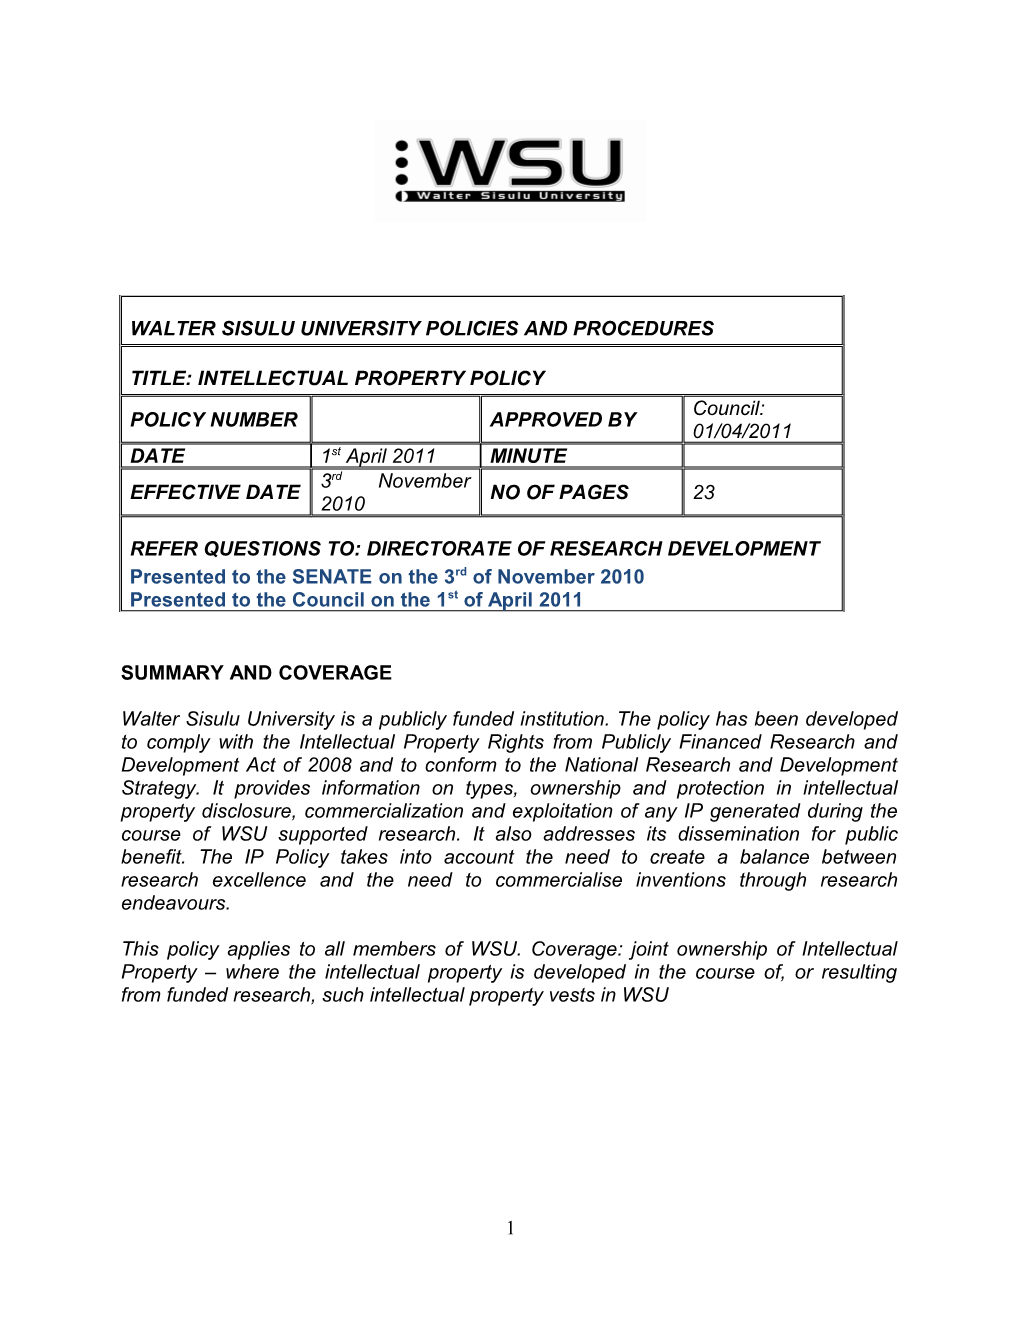 Walter Sisulu University Policies and Procedures